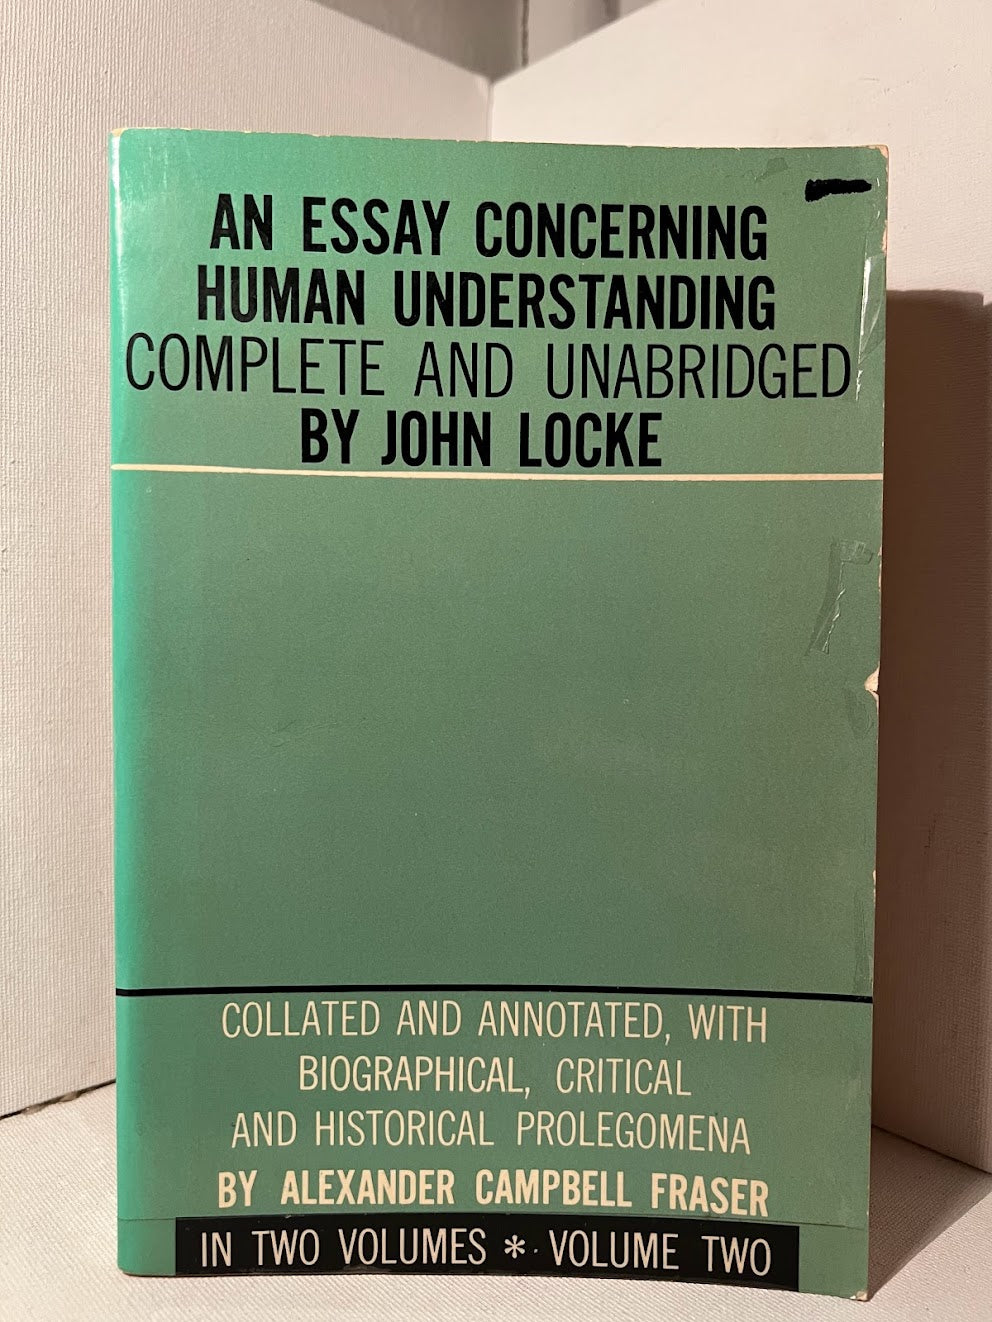 An Essay Concerning Human Understanding by John Locke